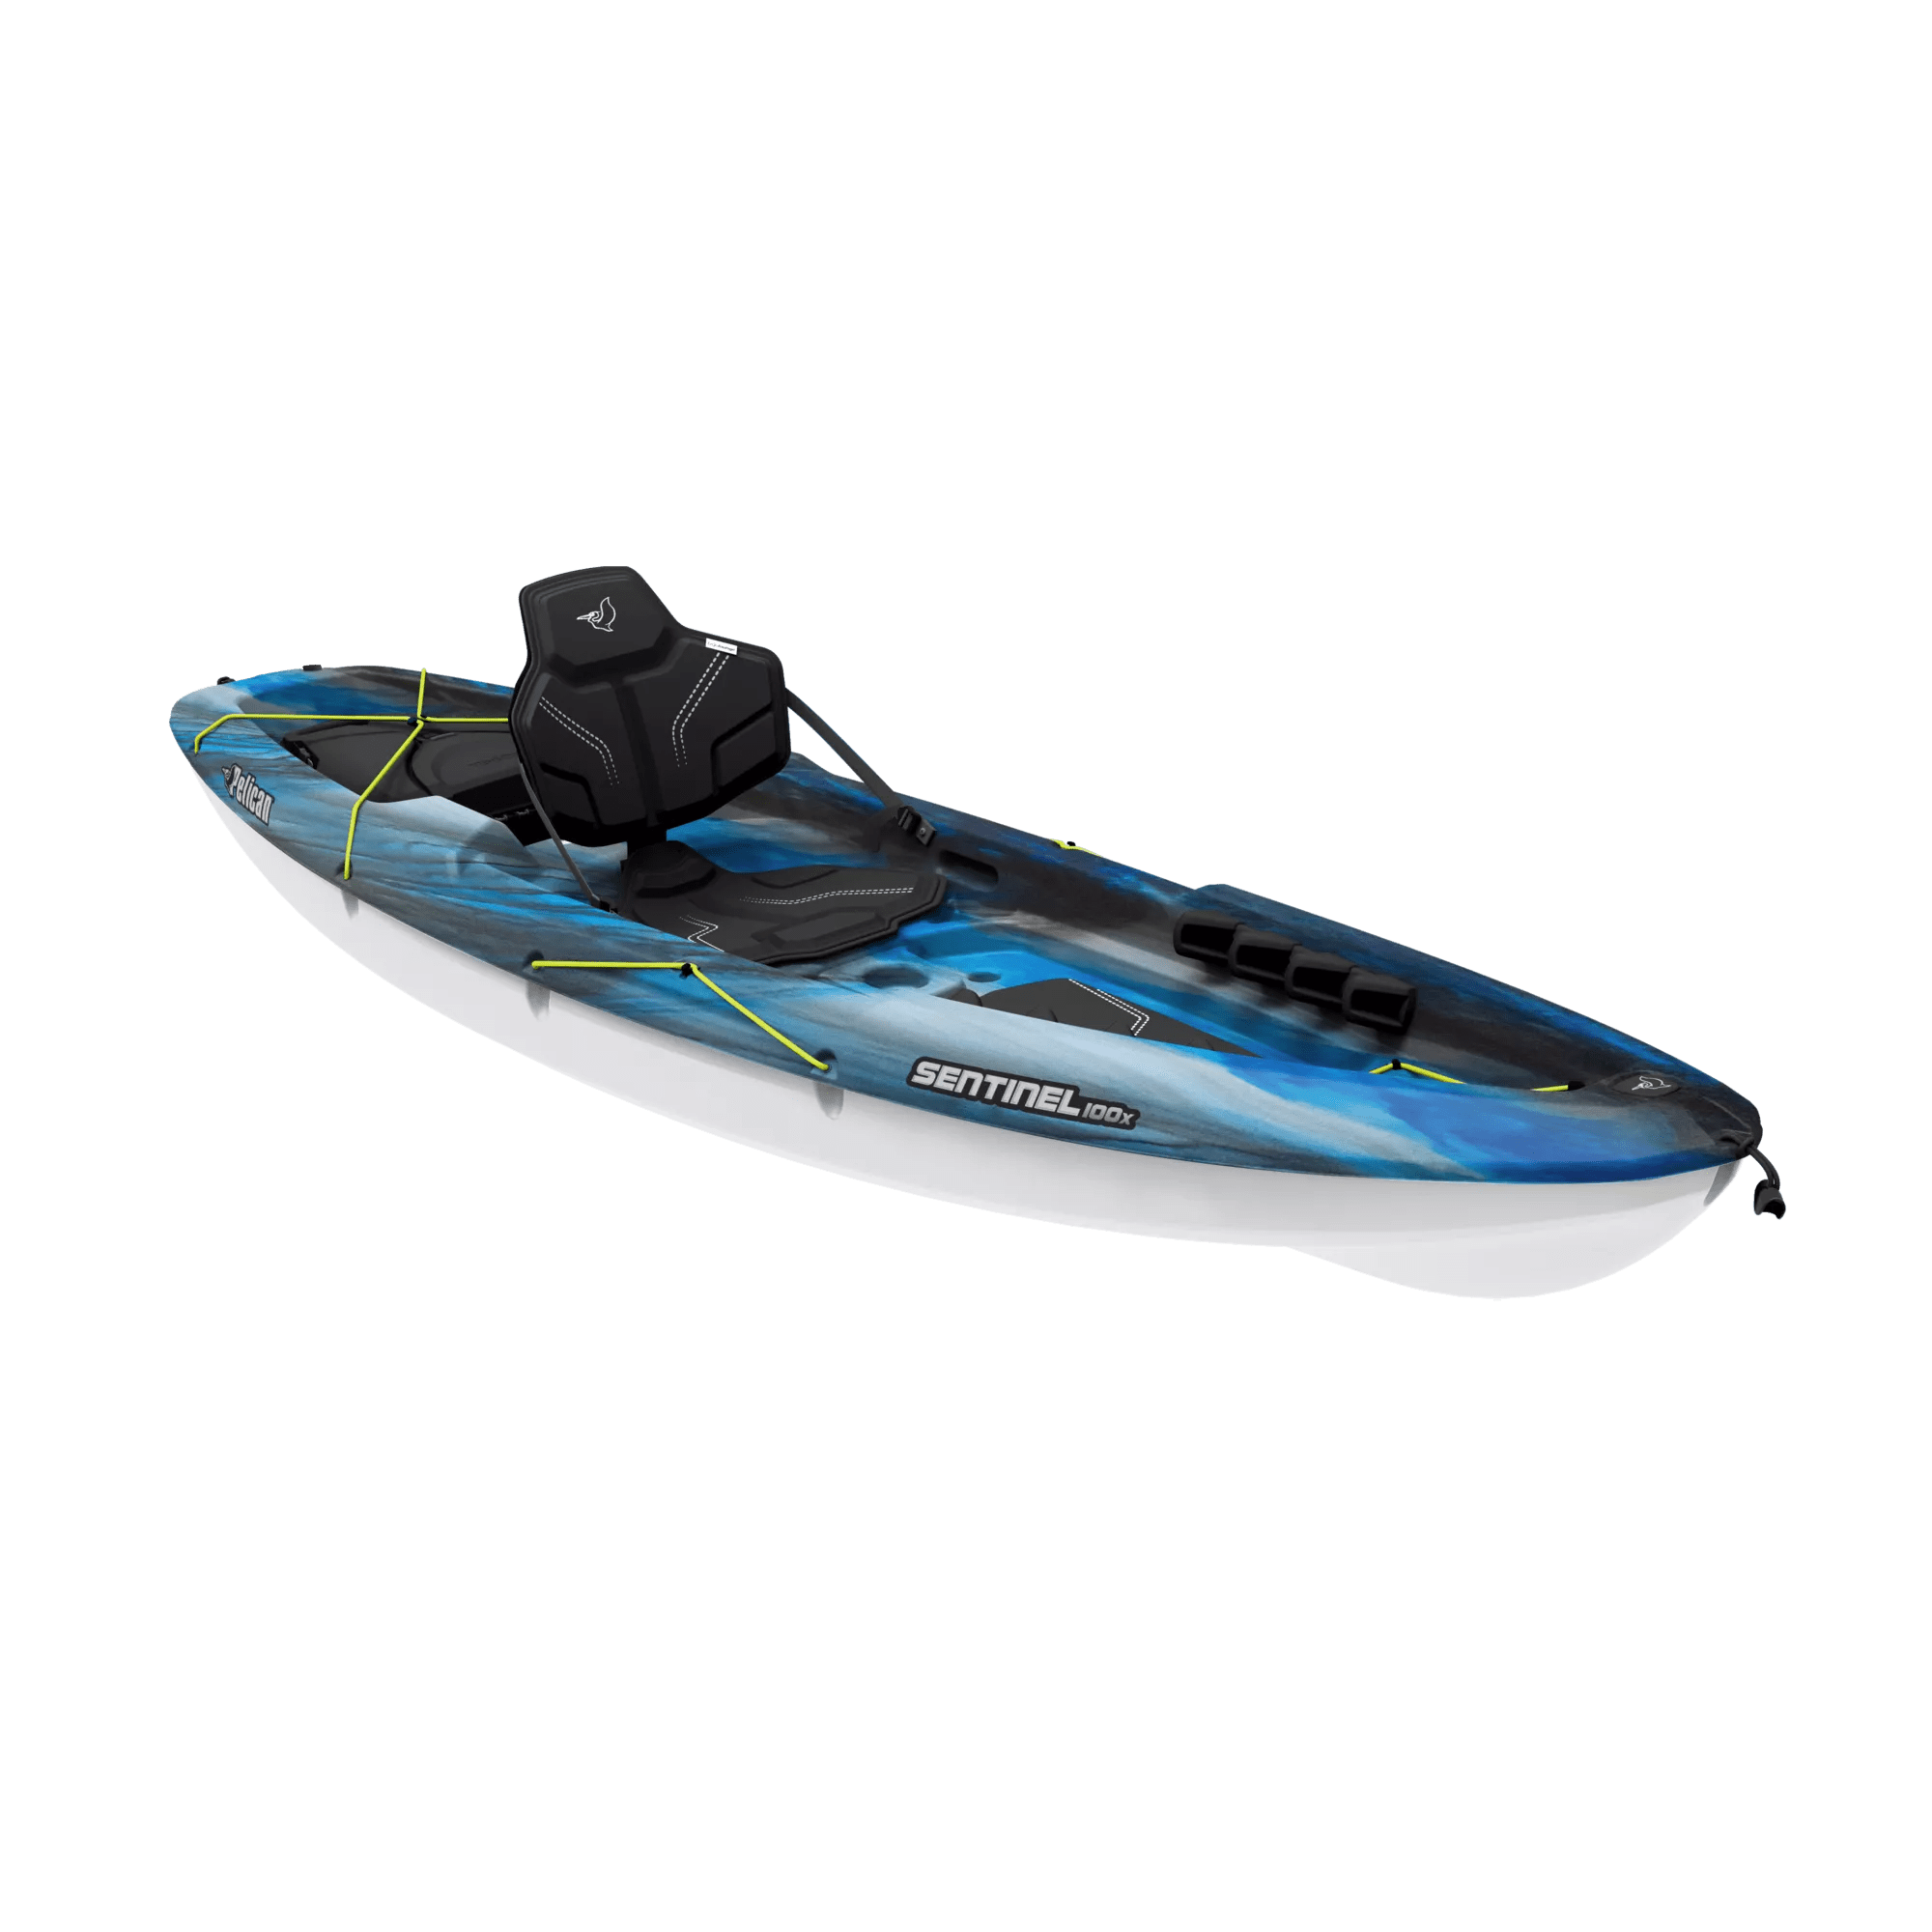 PELICAN - Sentinel 100X EXO Recreational Kayak - Grey - MEF10P100-00 - 